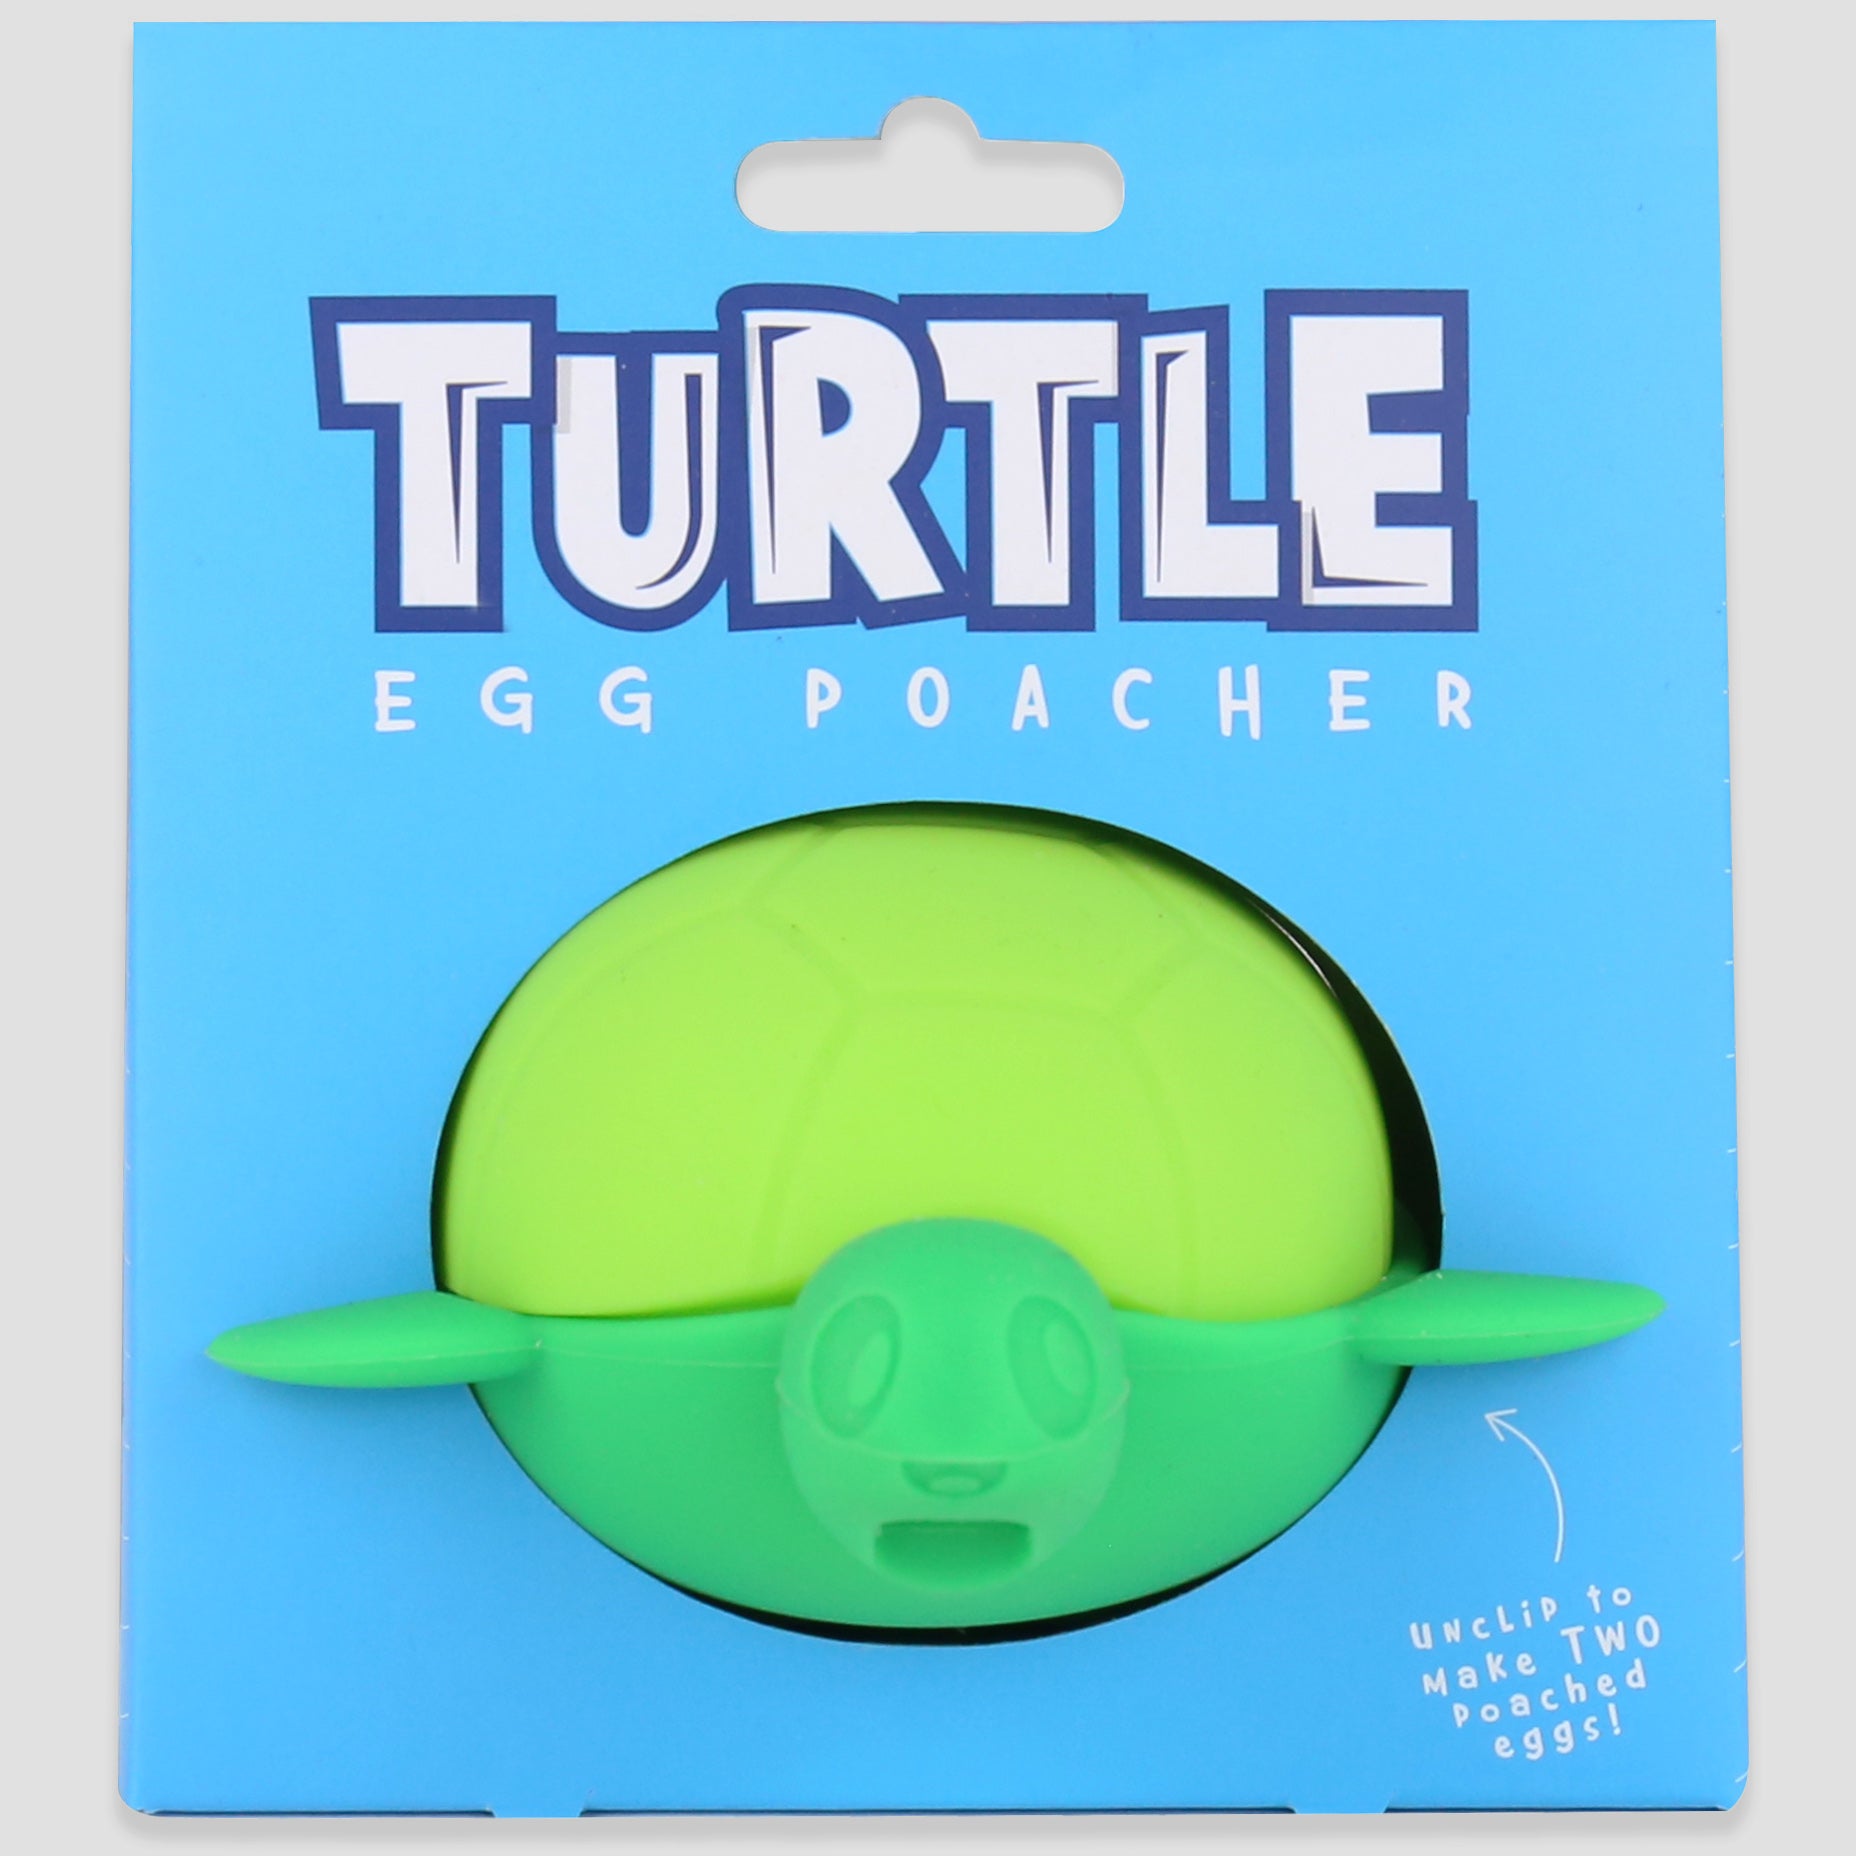 Turtle Egg Poacher